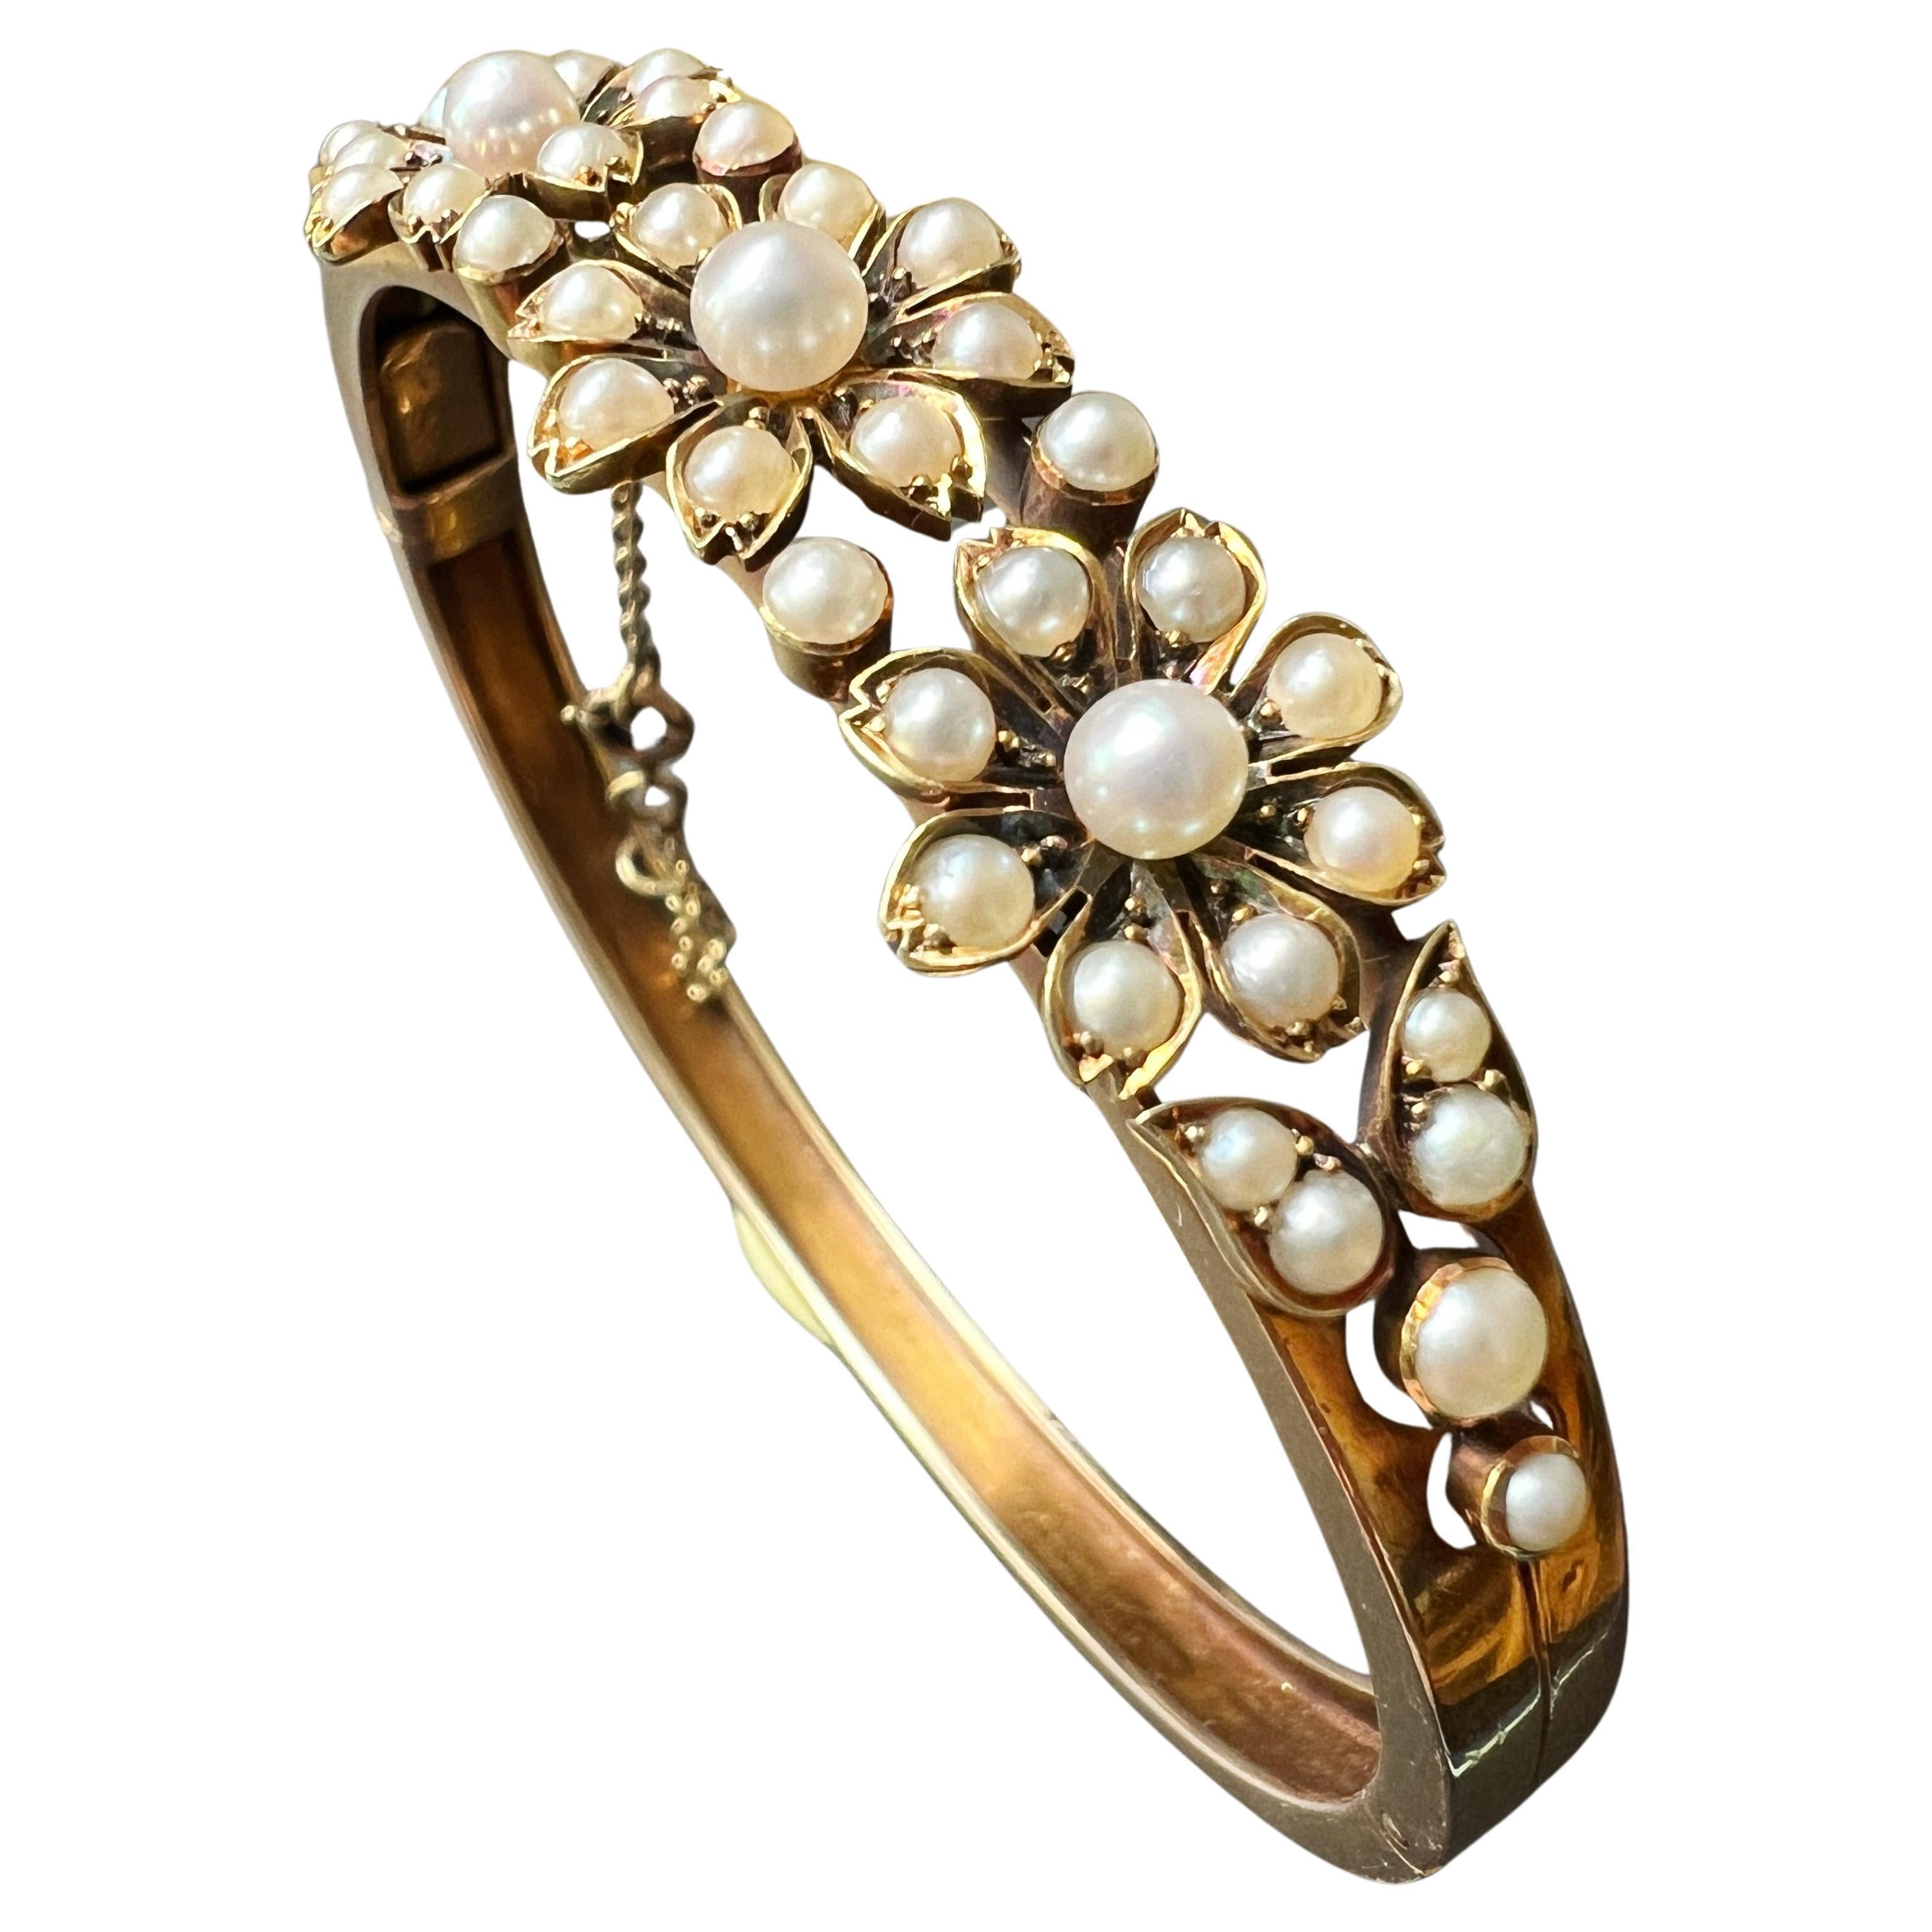 French antique Victorian 14k gold pearl flower bangle bracelet